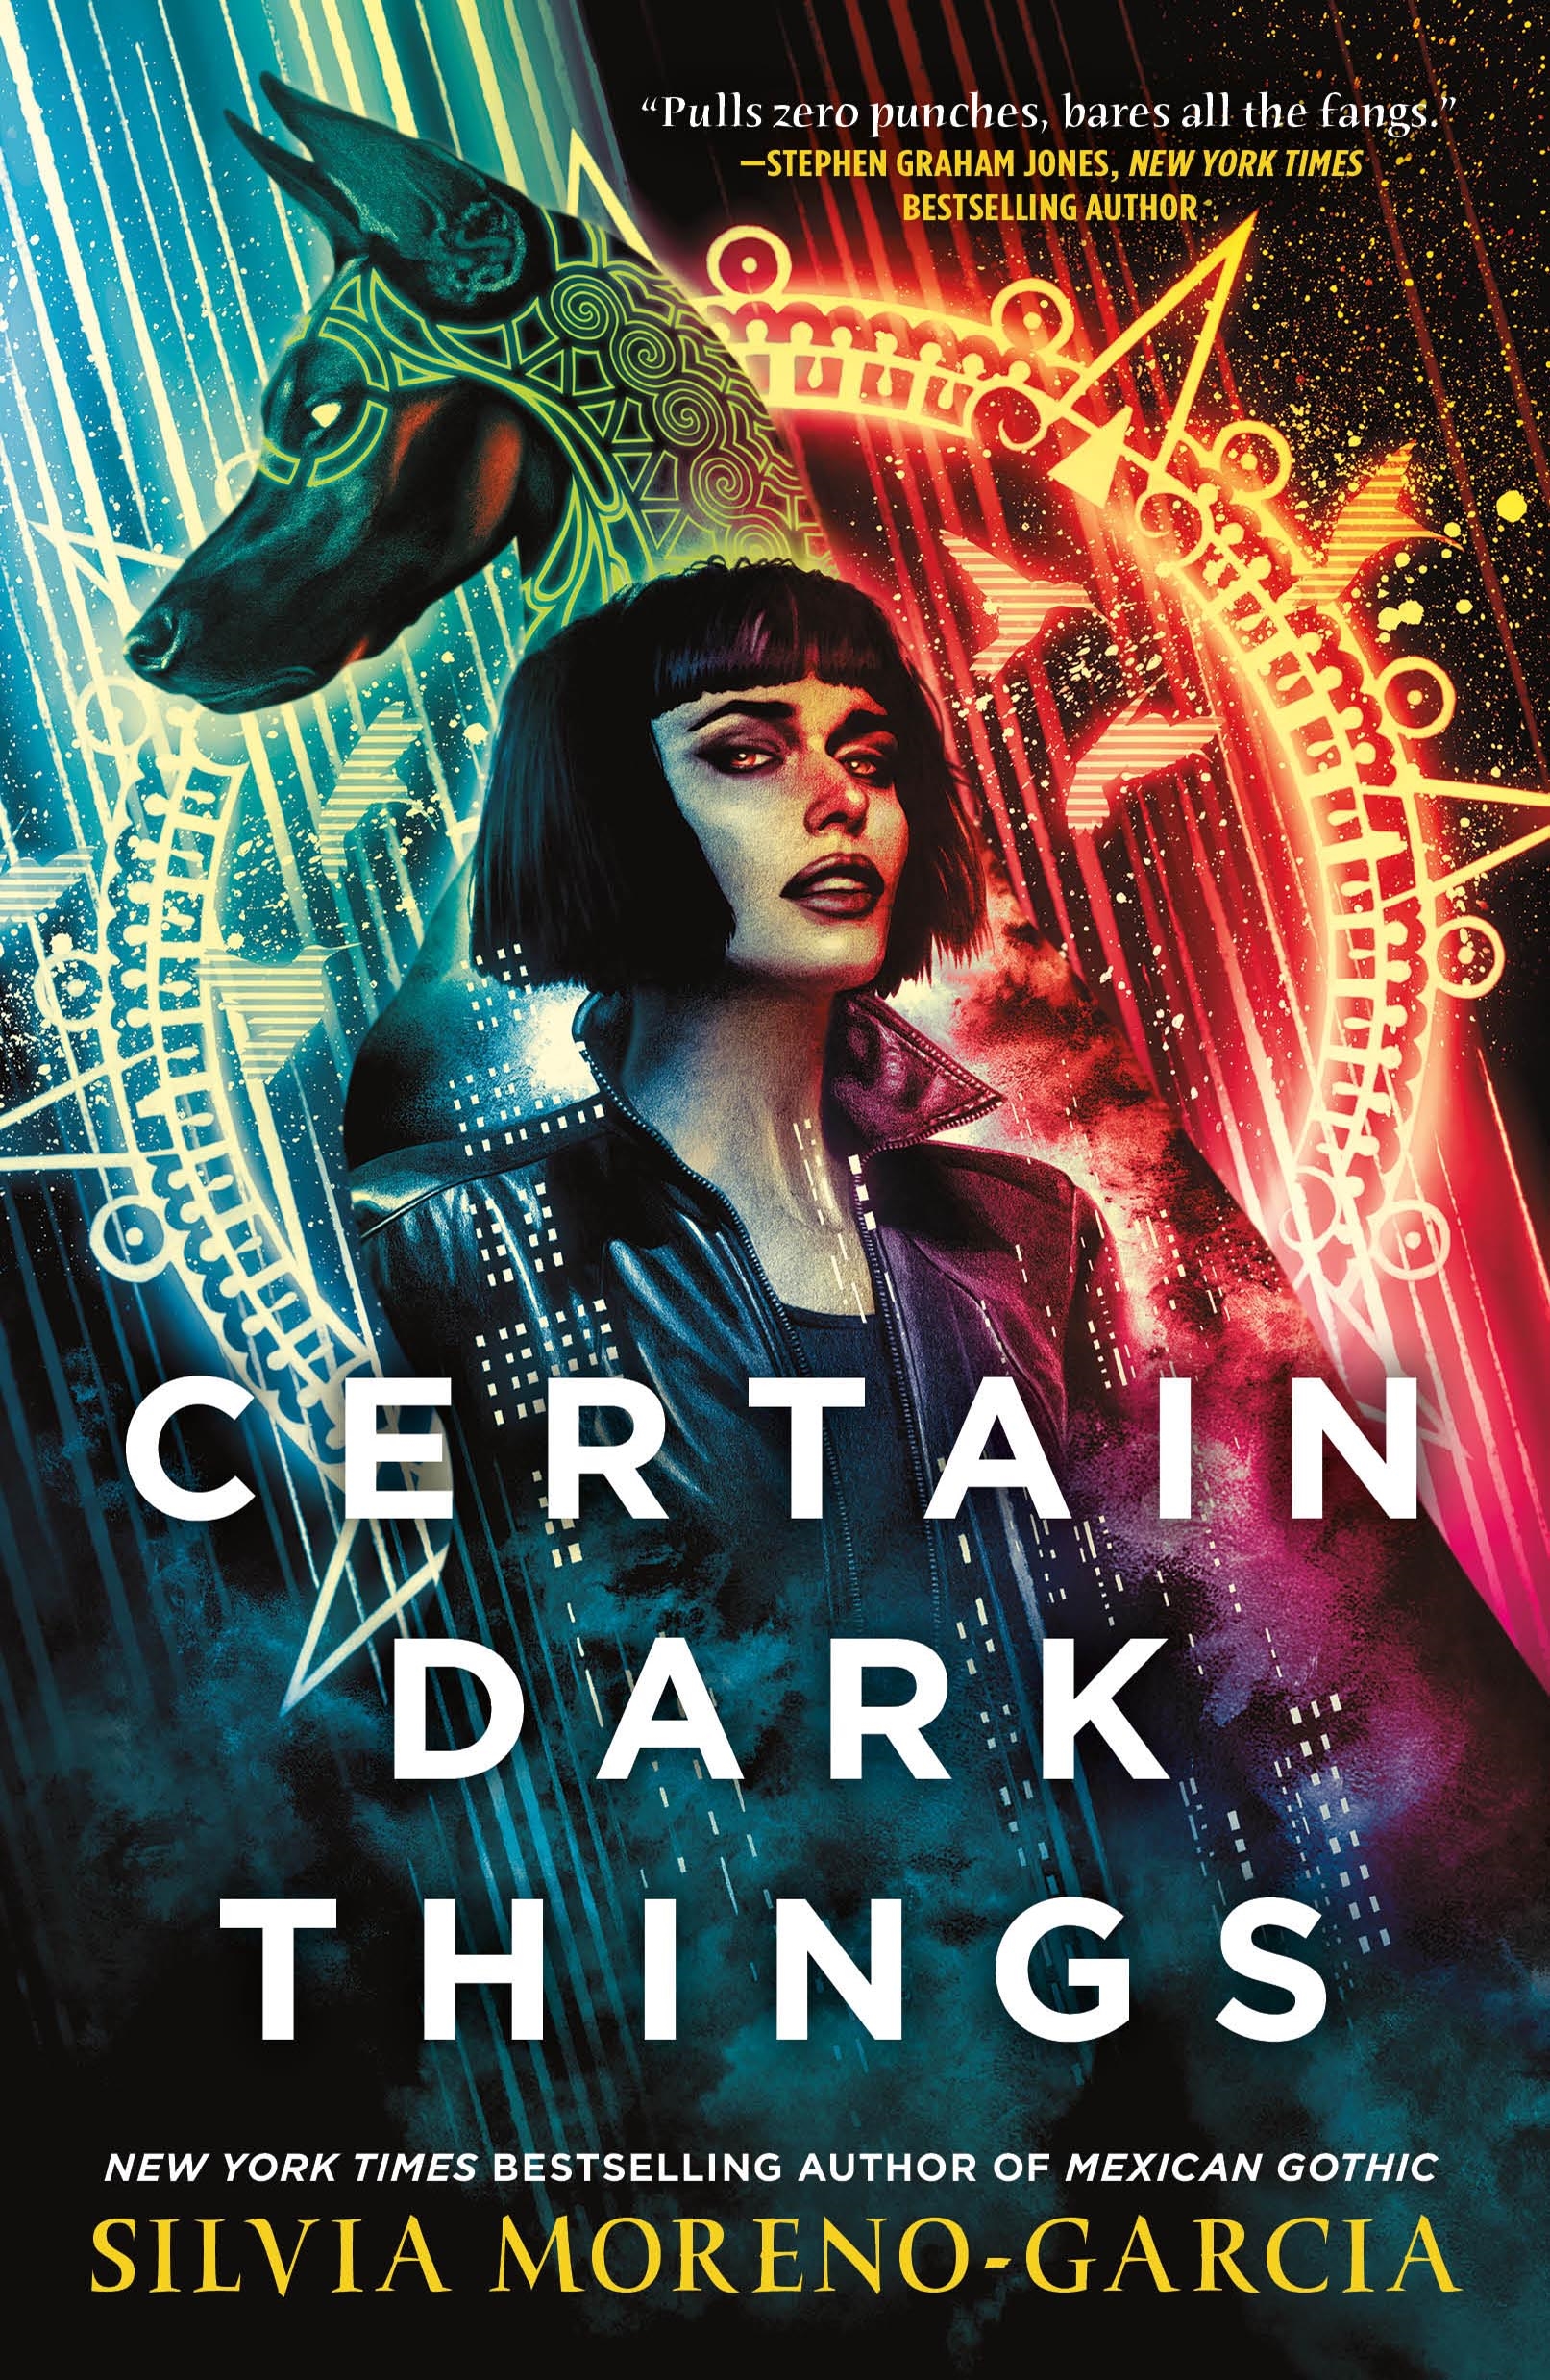 Certain Dark Things : A Novel by Silvia Moreno-Garcia